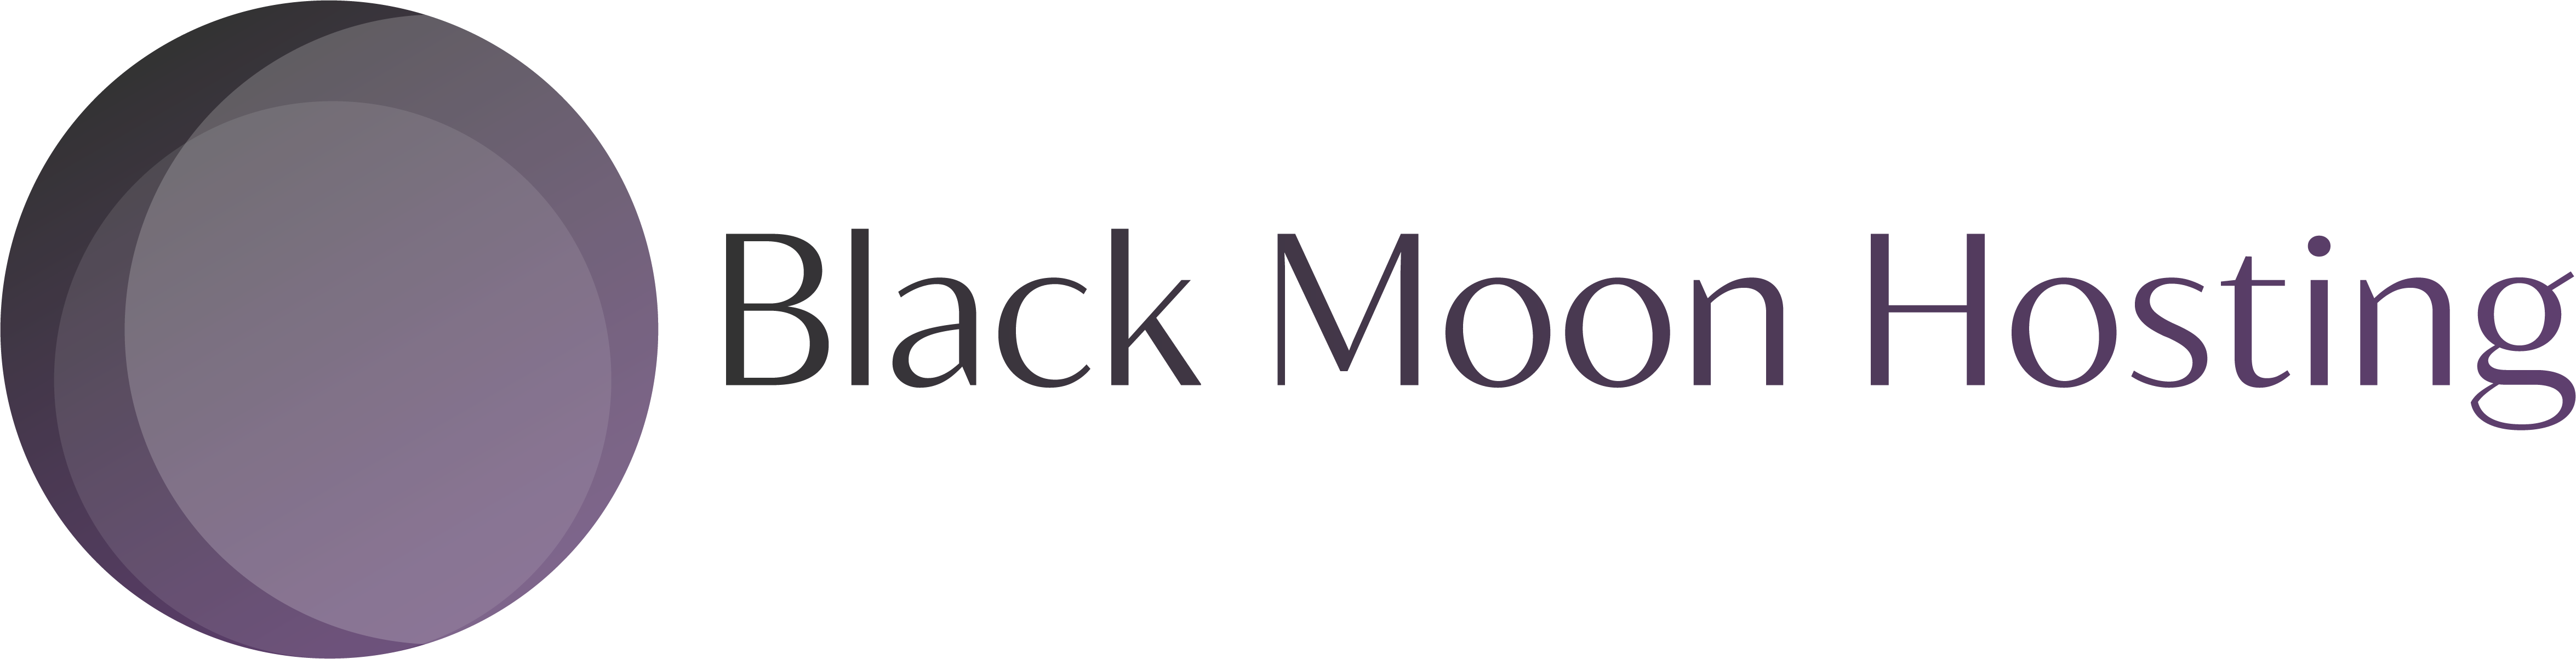 Black Moon Hosting